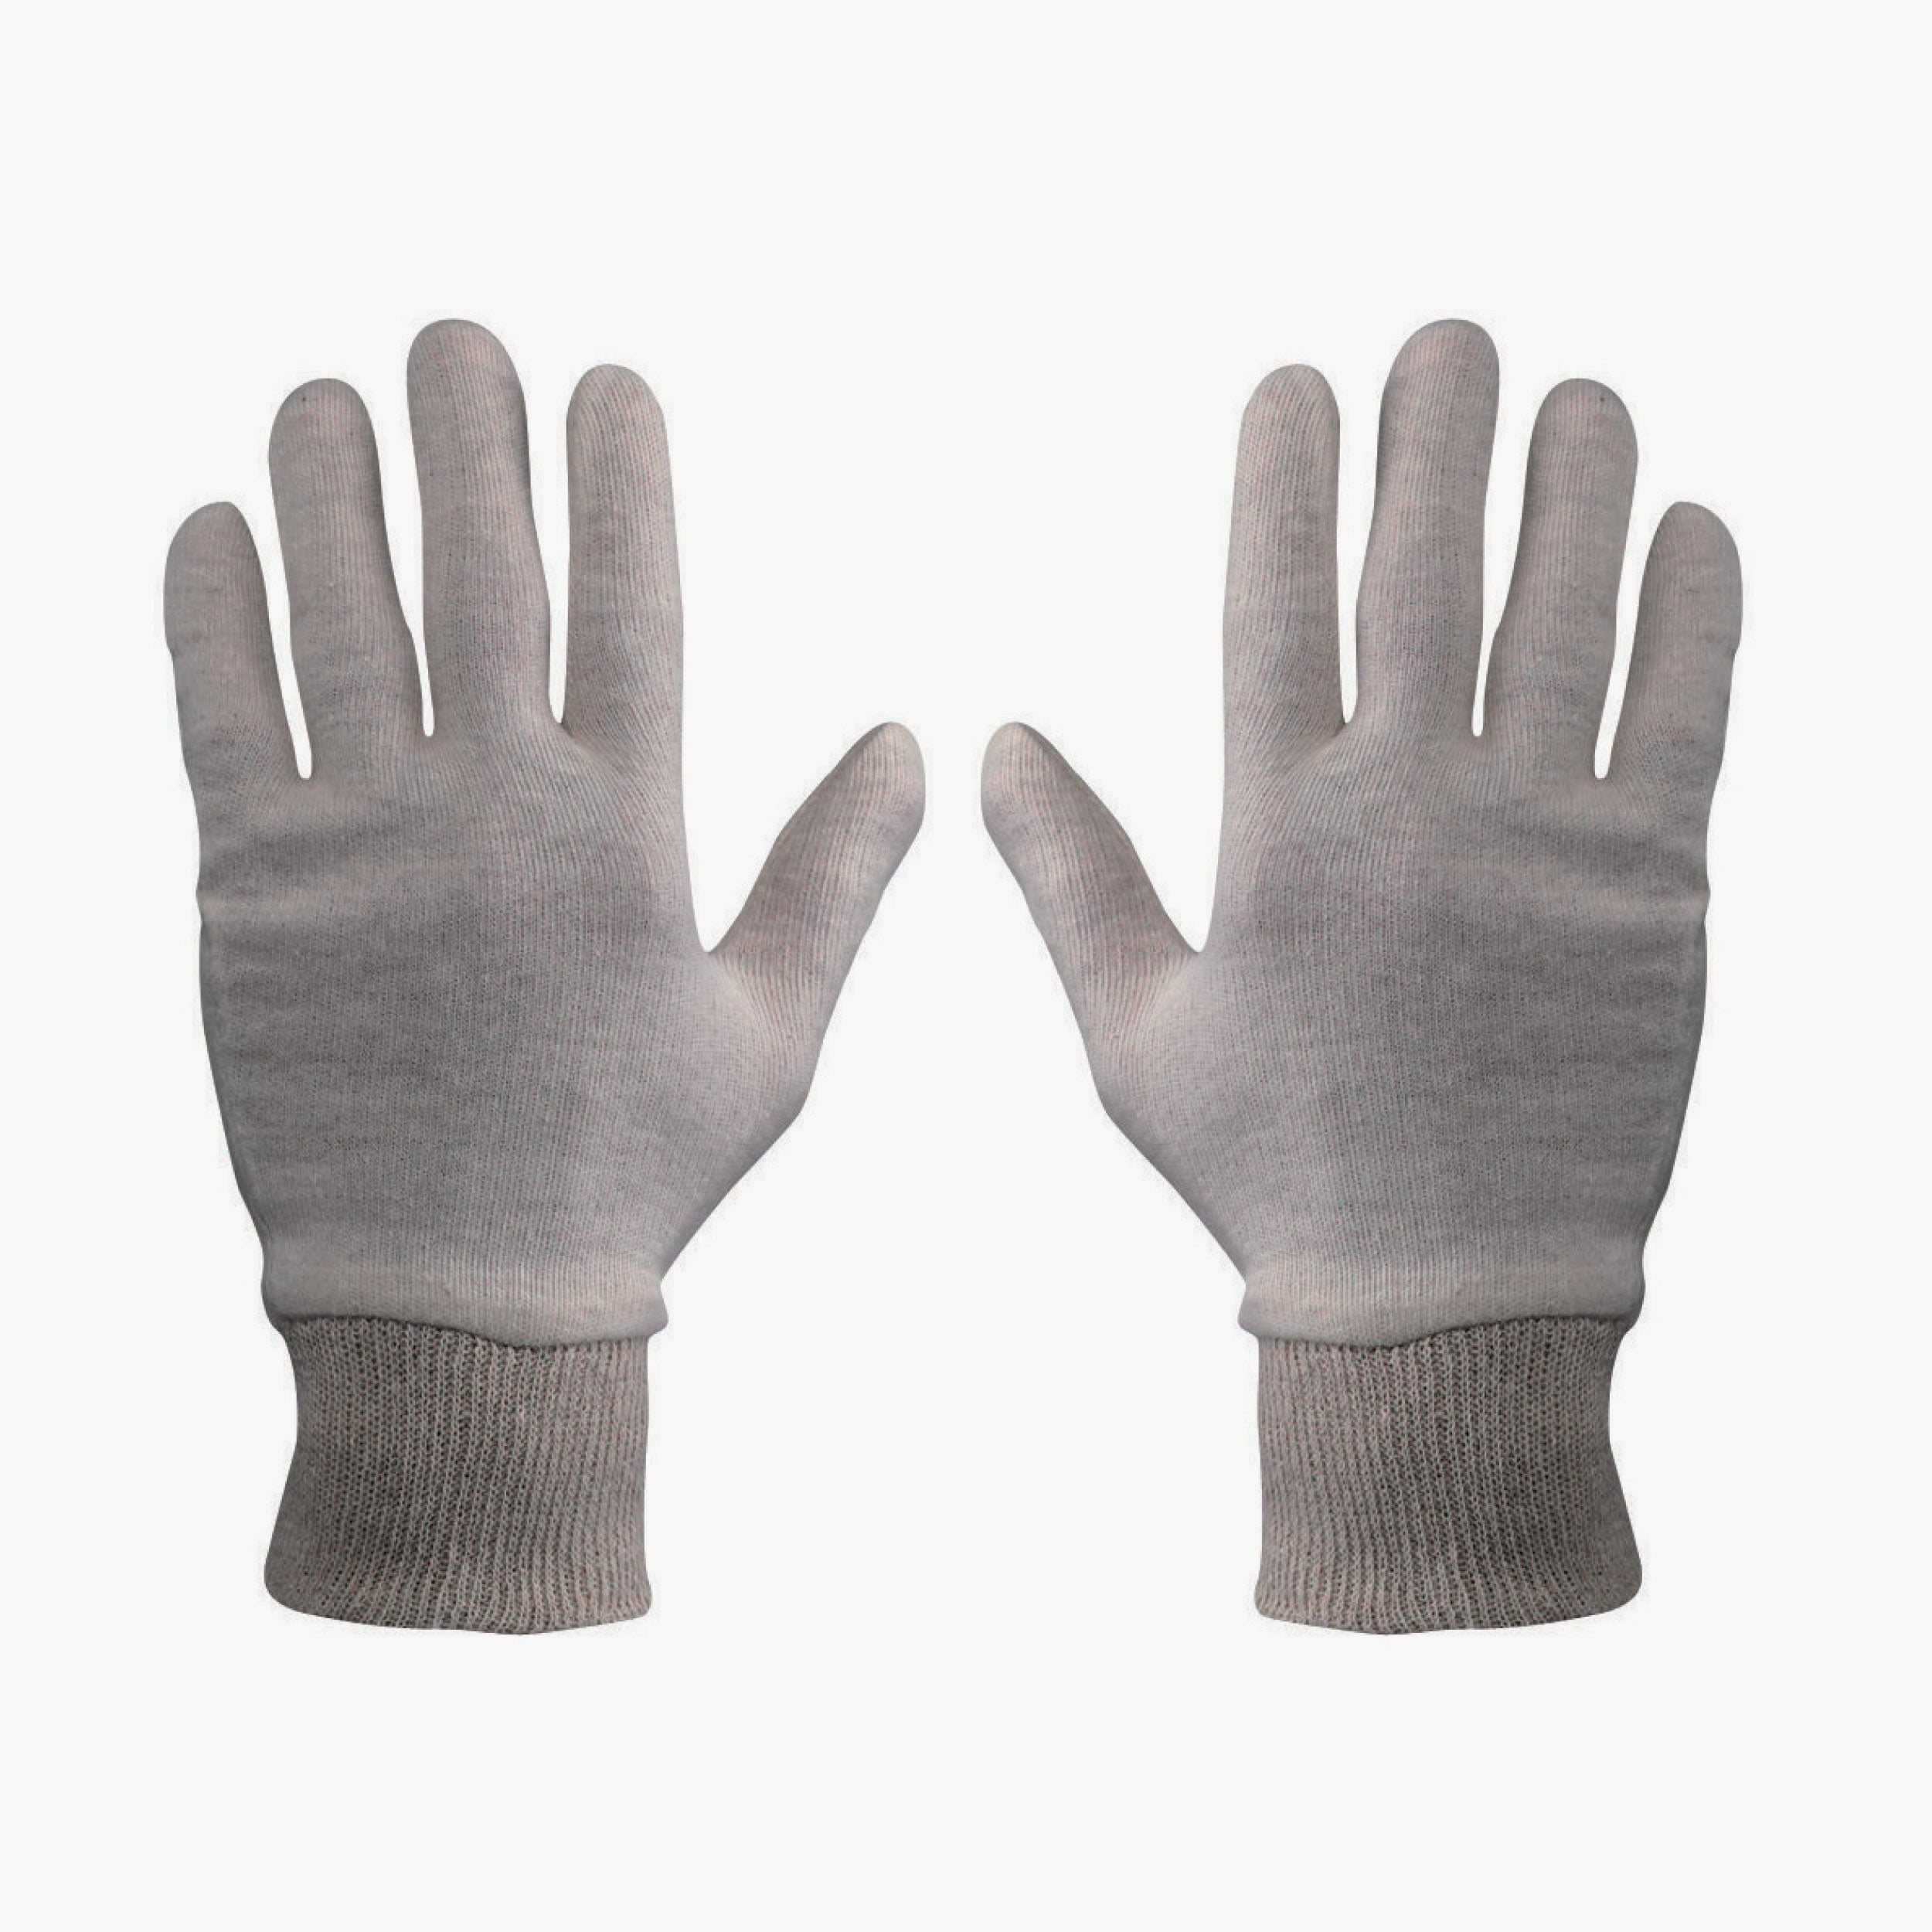 Cotton knit cuff gloves - 12pcs